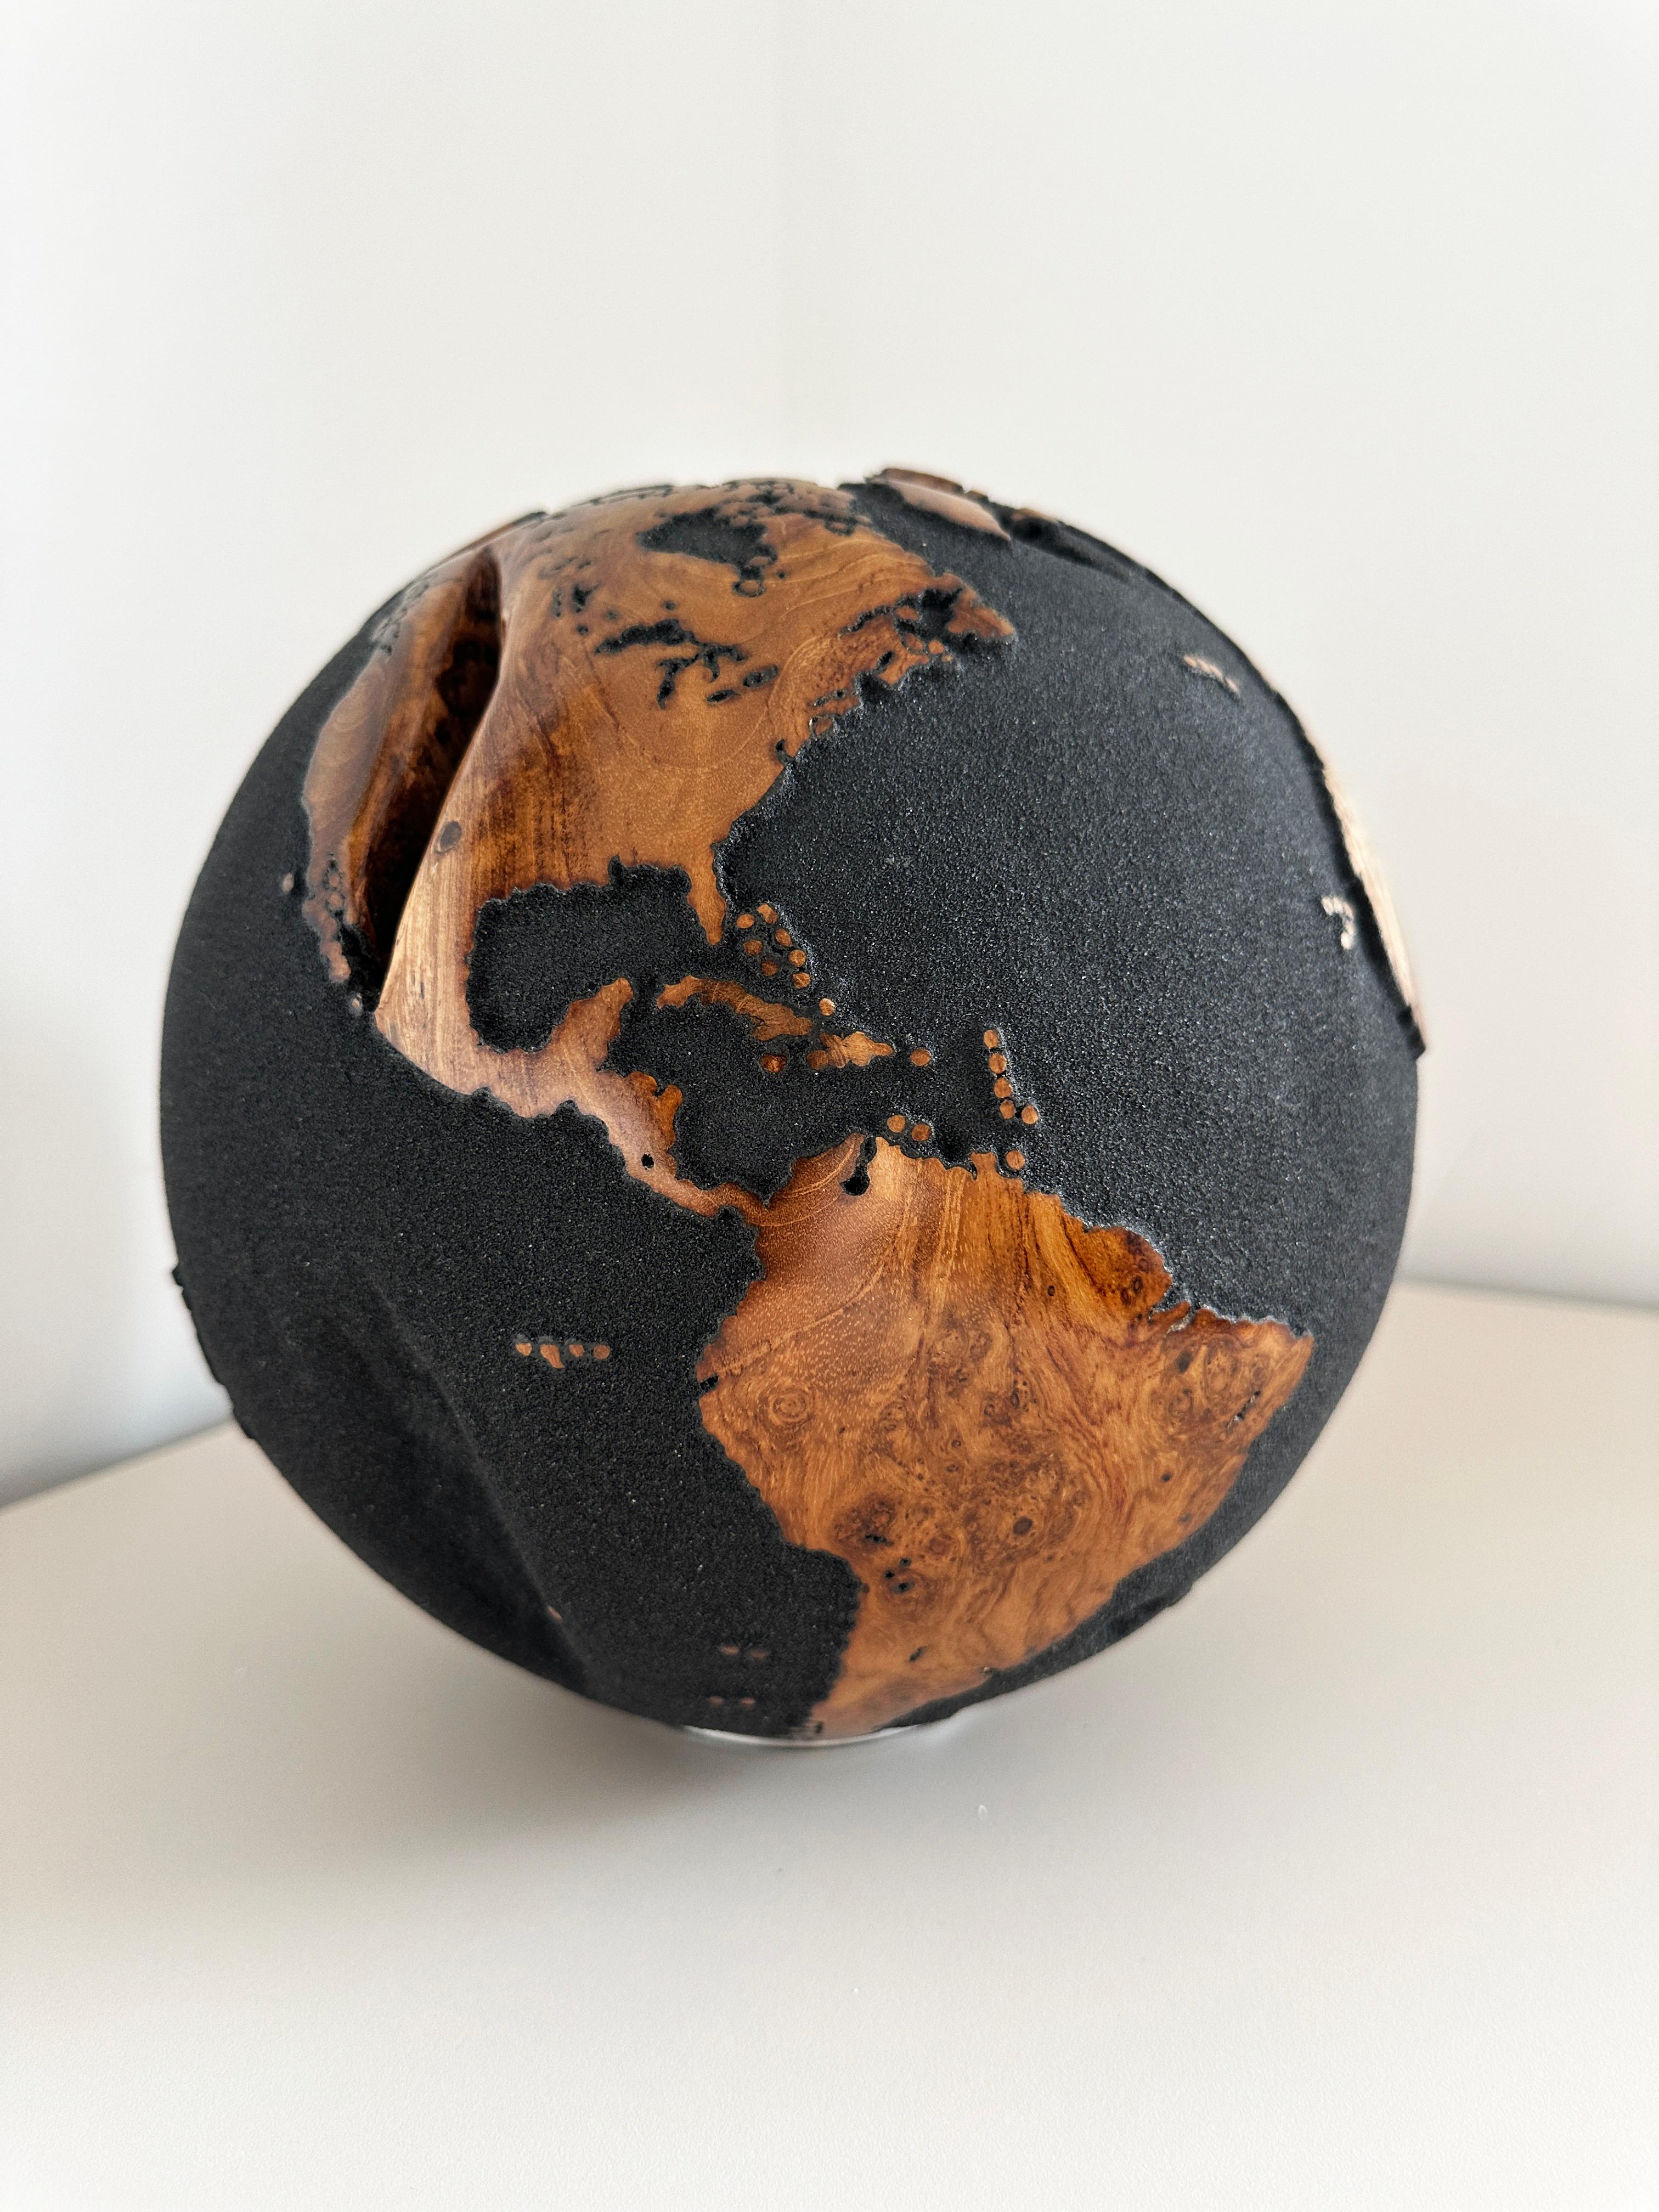 Around the Globe Black Teak by Bruno Helgen - wood globe sculpture  For Sale 10